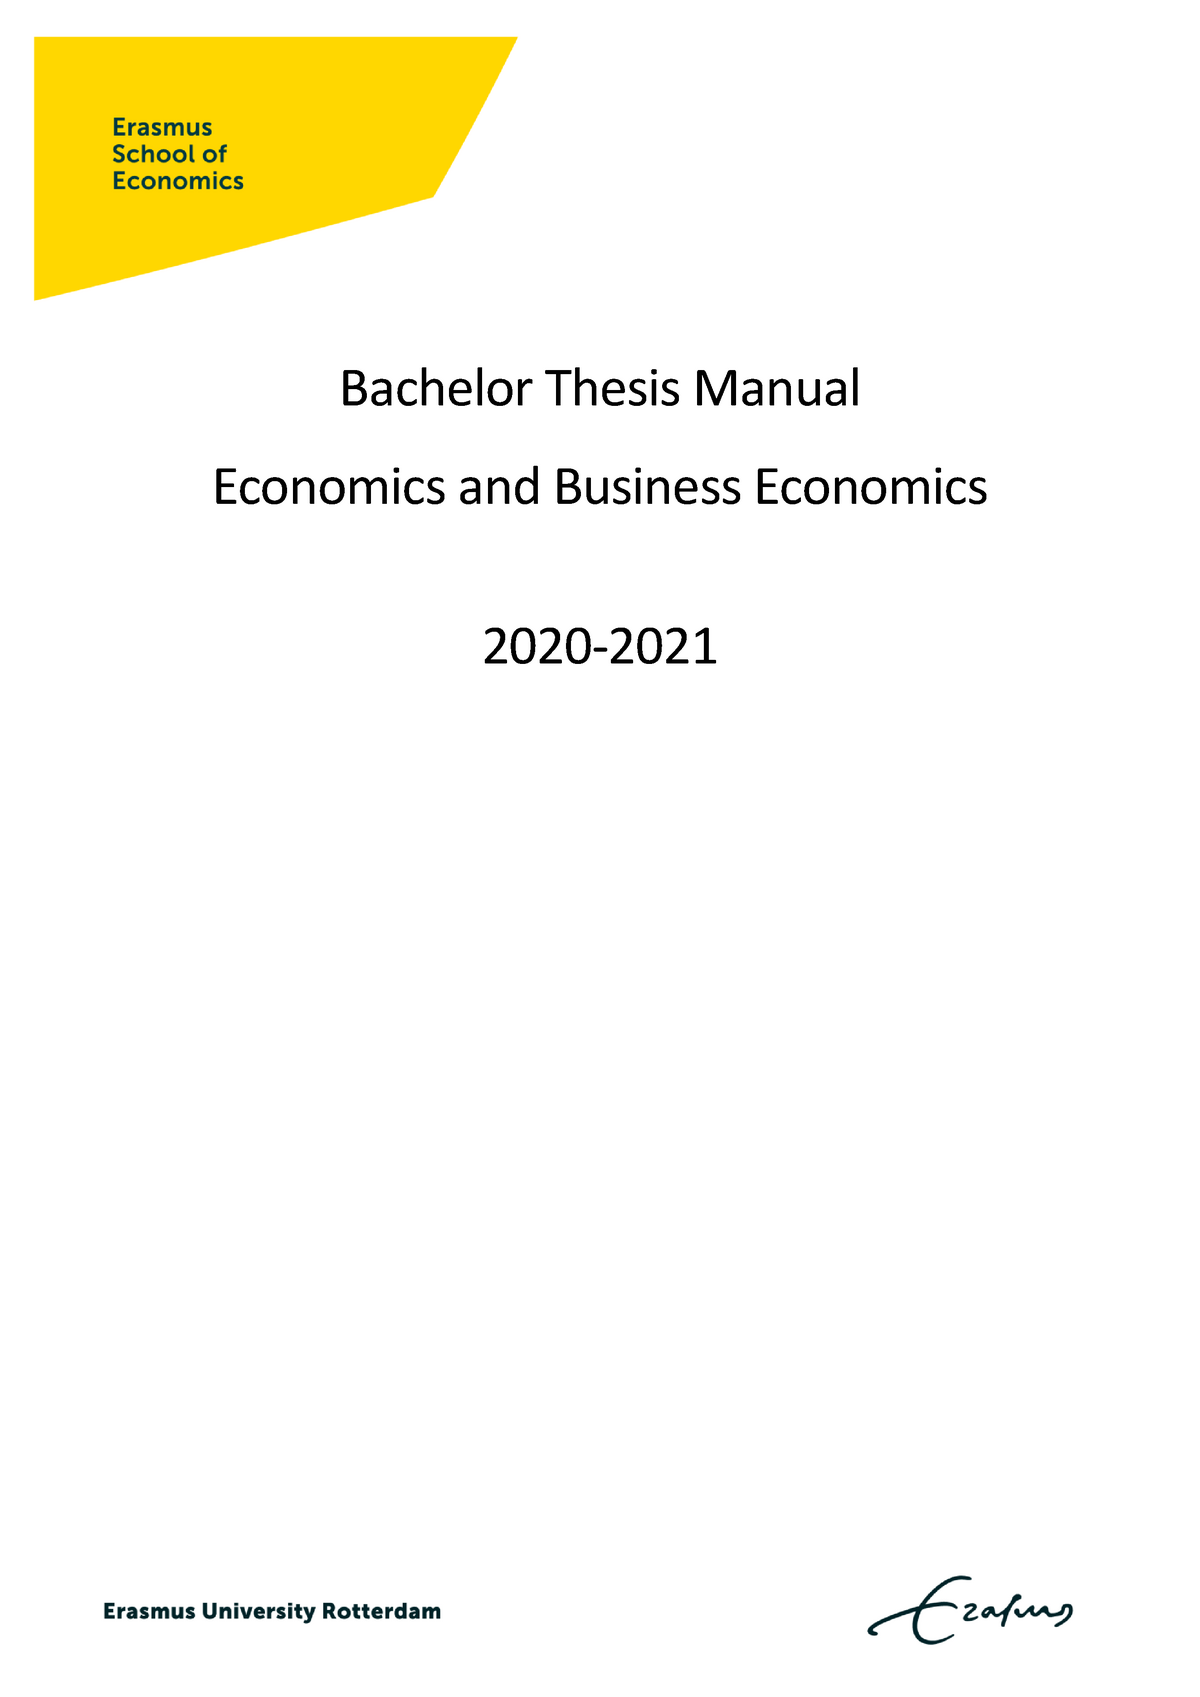 thesis erasmus economics